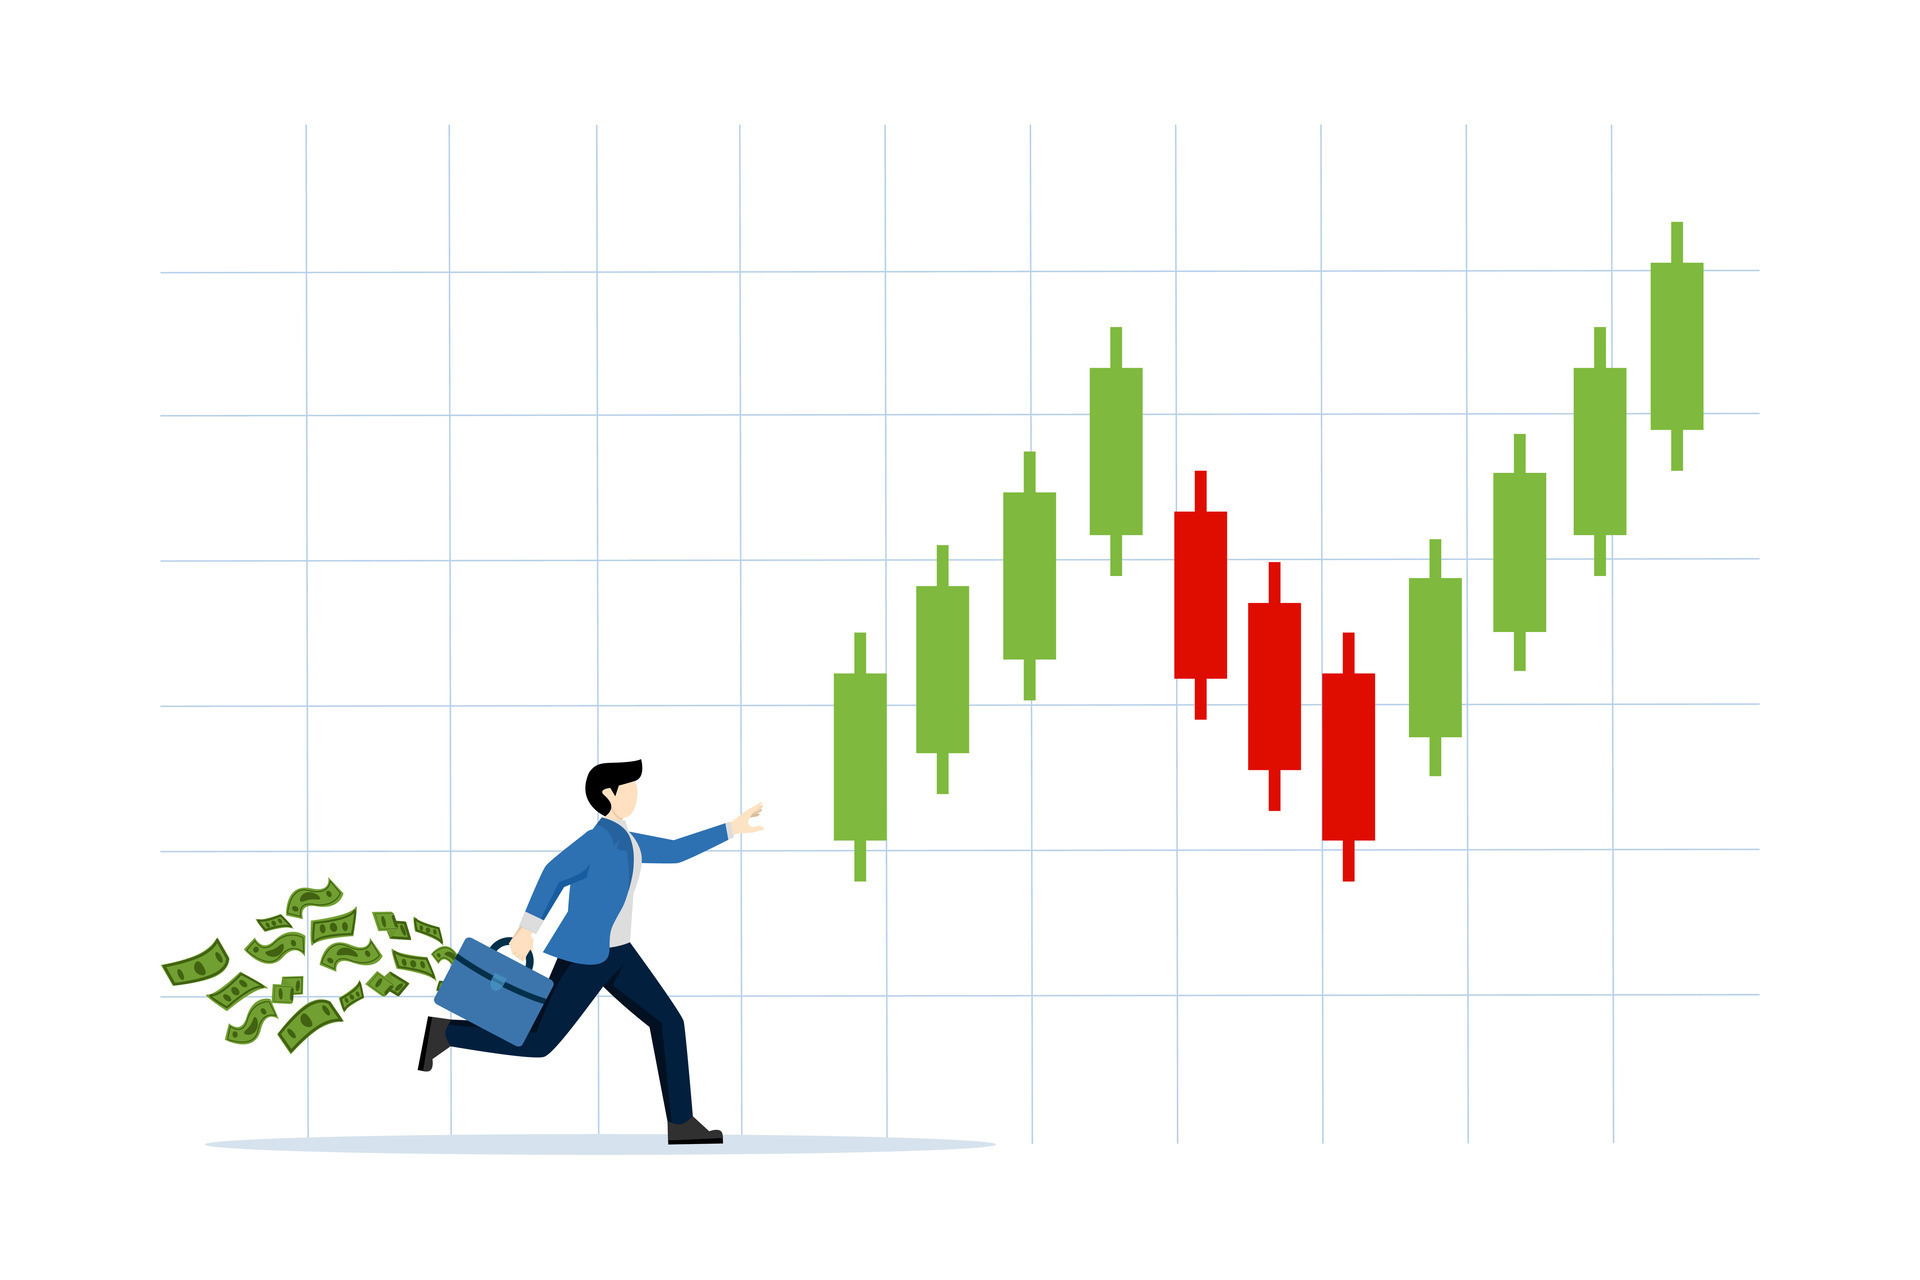 Stock market today: Stocks close mixed, bitcoin surges as Wall Street awaits inflation data